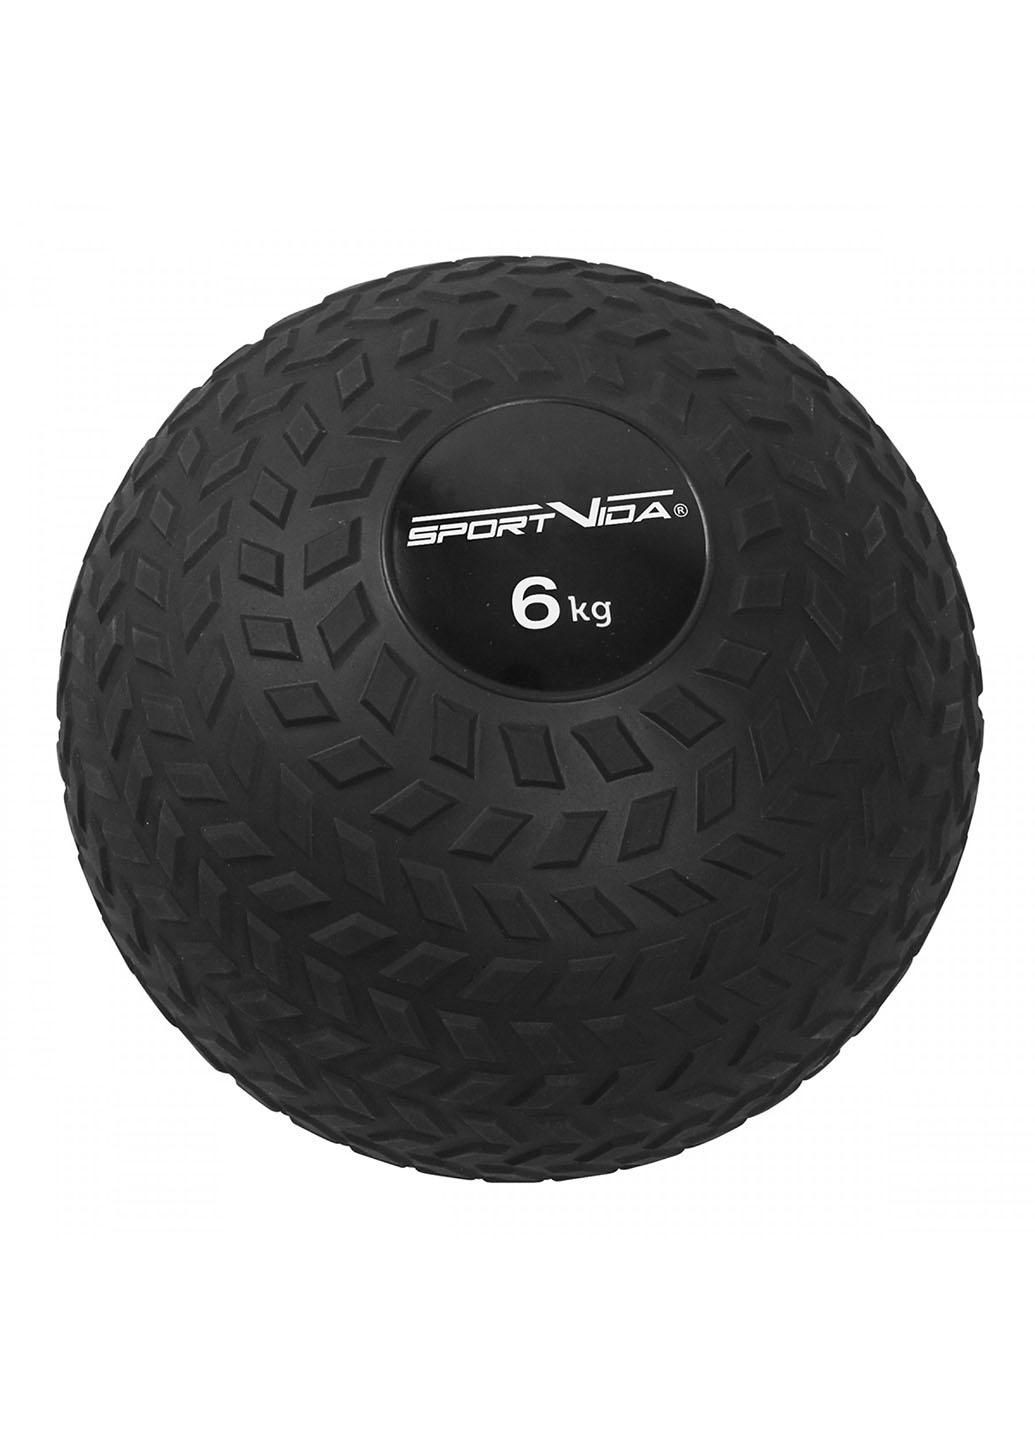 Слэмбол (медицинский мяч) для кроссфита Slam Ball 6 кг SV-HK0348 Black SportVida (279303124)